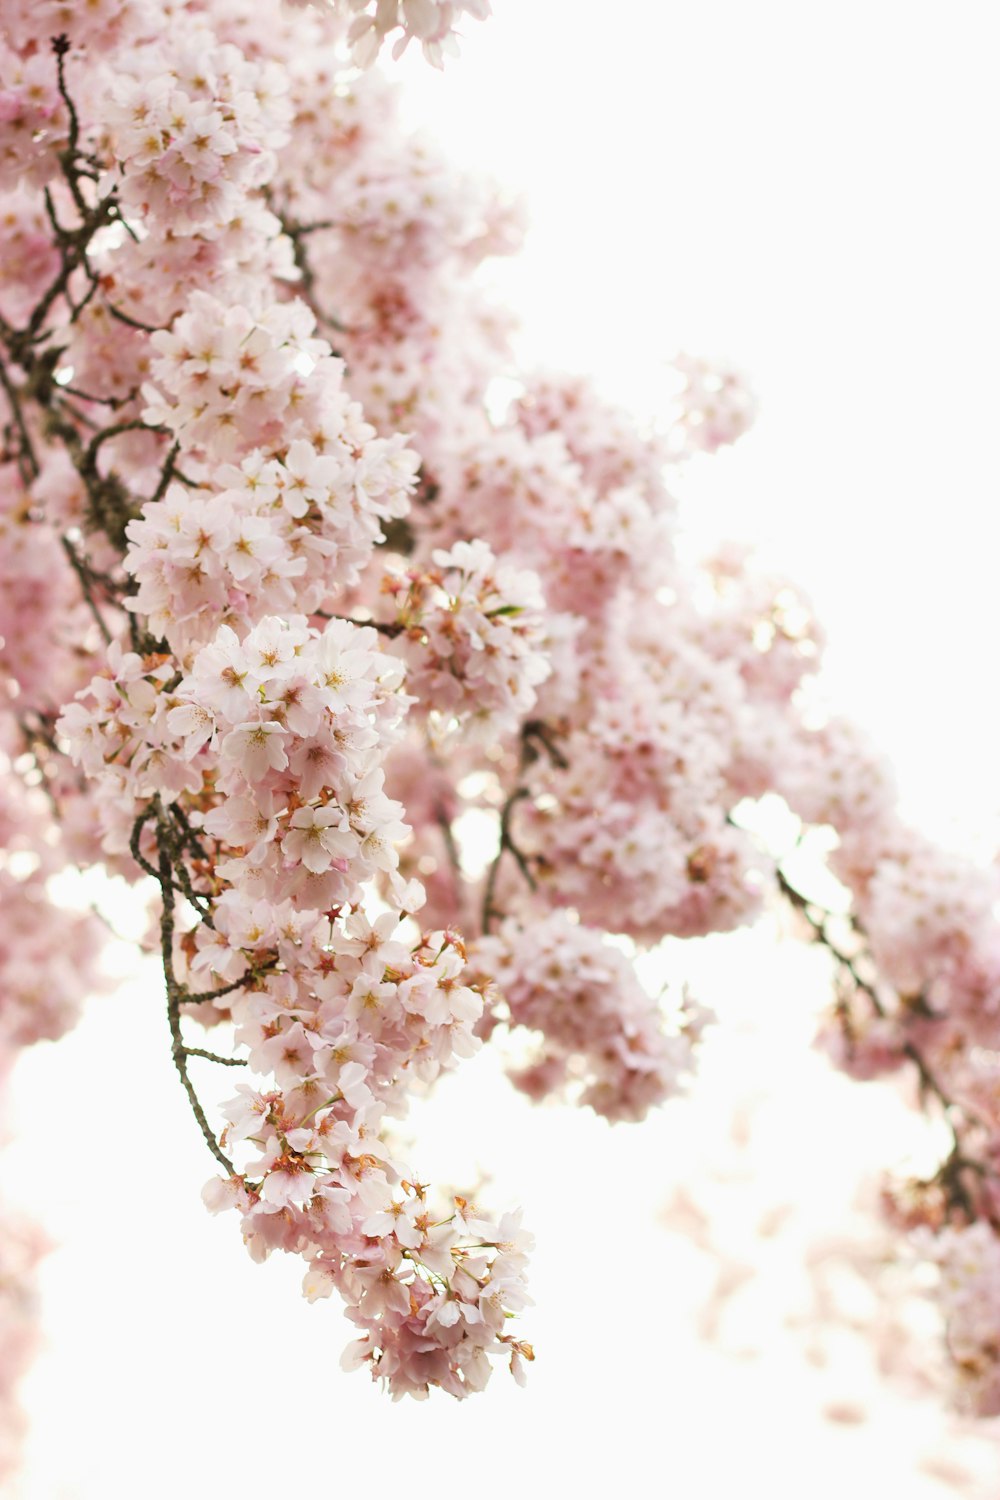 Fotografia de foco raso de flores cor-de-rosa